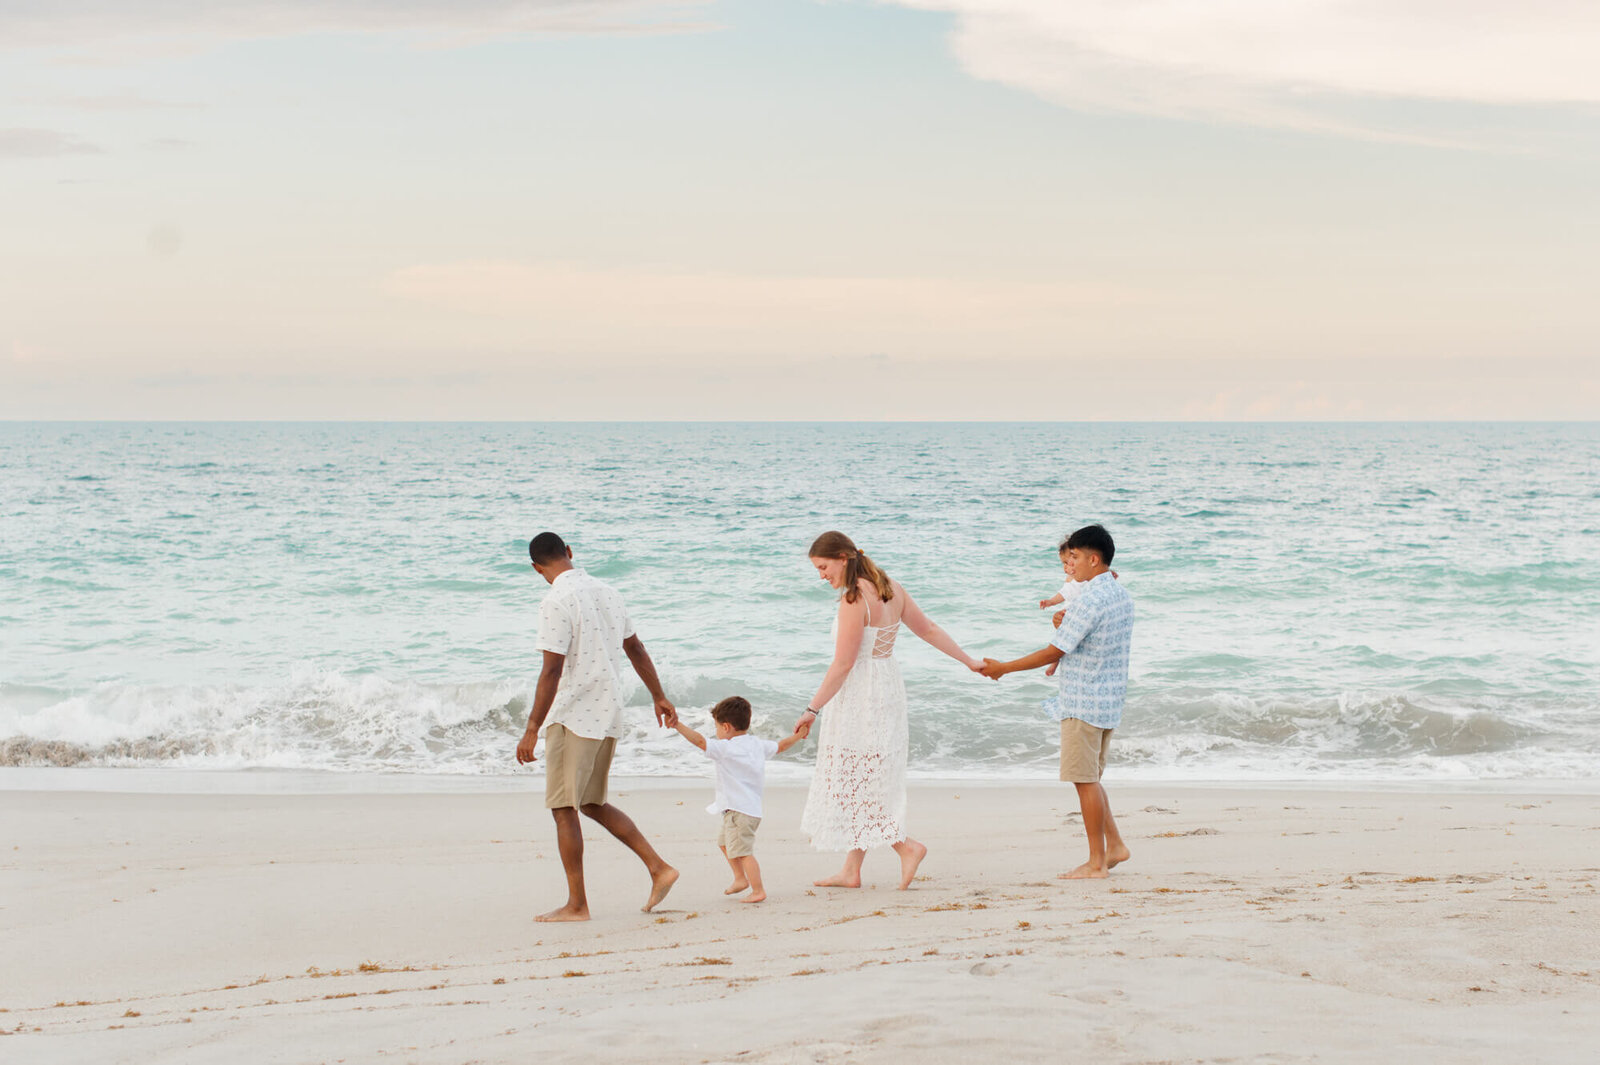 Melbourne Fl family photographer captures family walking along the beach shoreline at sunset